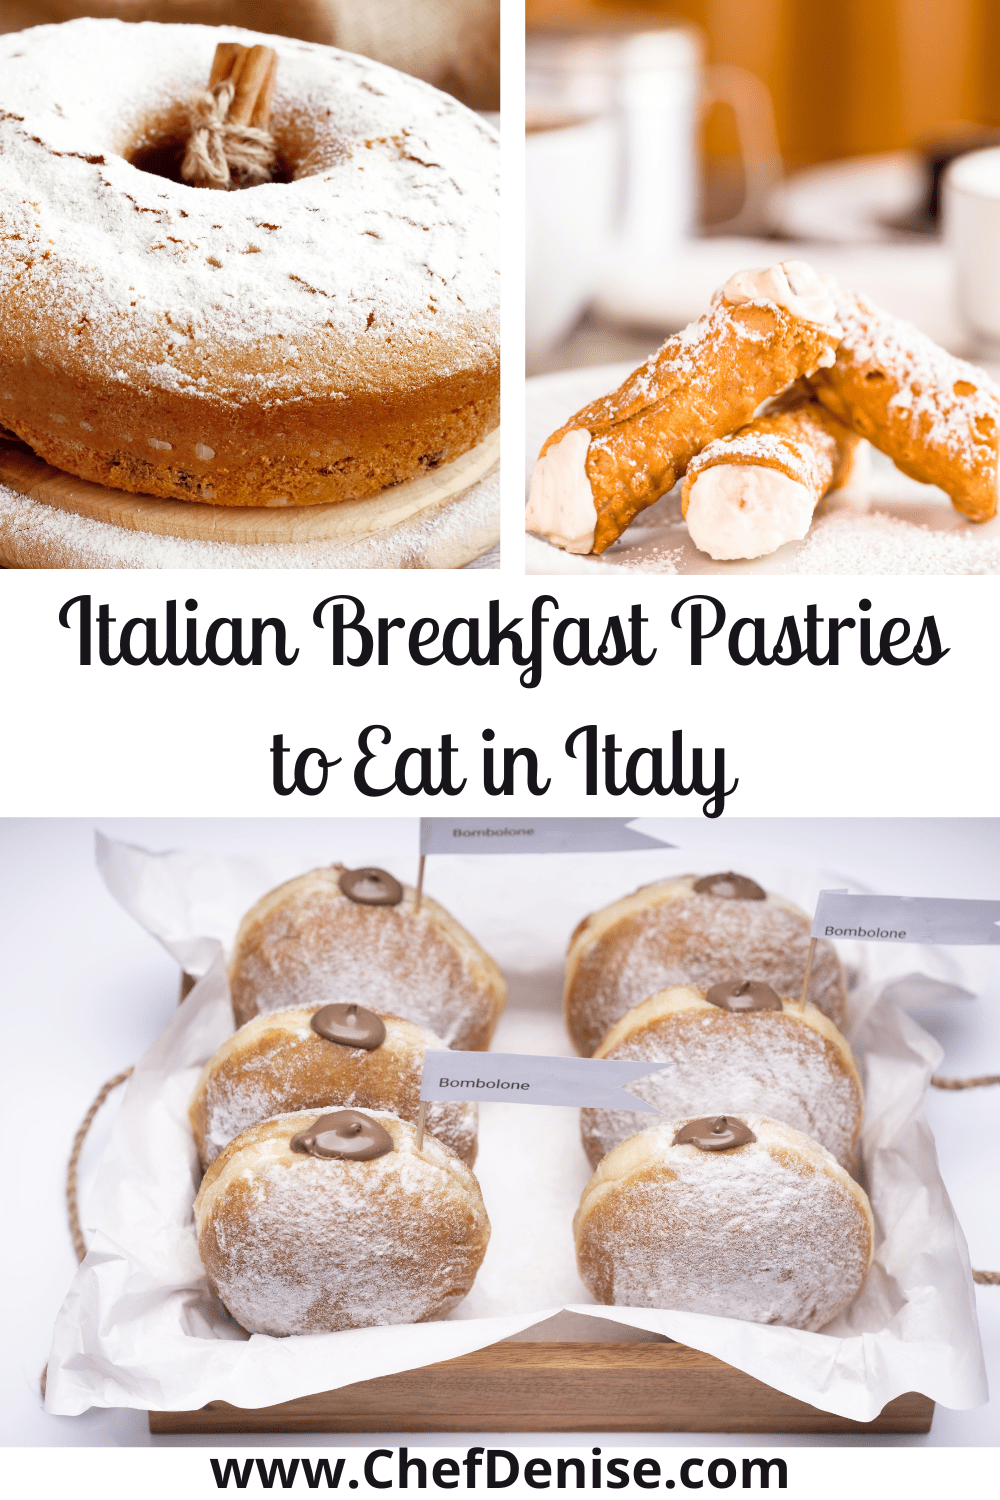 https://images.squarespace-cdn.com/content/v1/5e484ab628c78d6f7e602d73/695be253-3afa-4191-a606-f162db2dbc89/popular-italian-breakfast-pastries-min.png